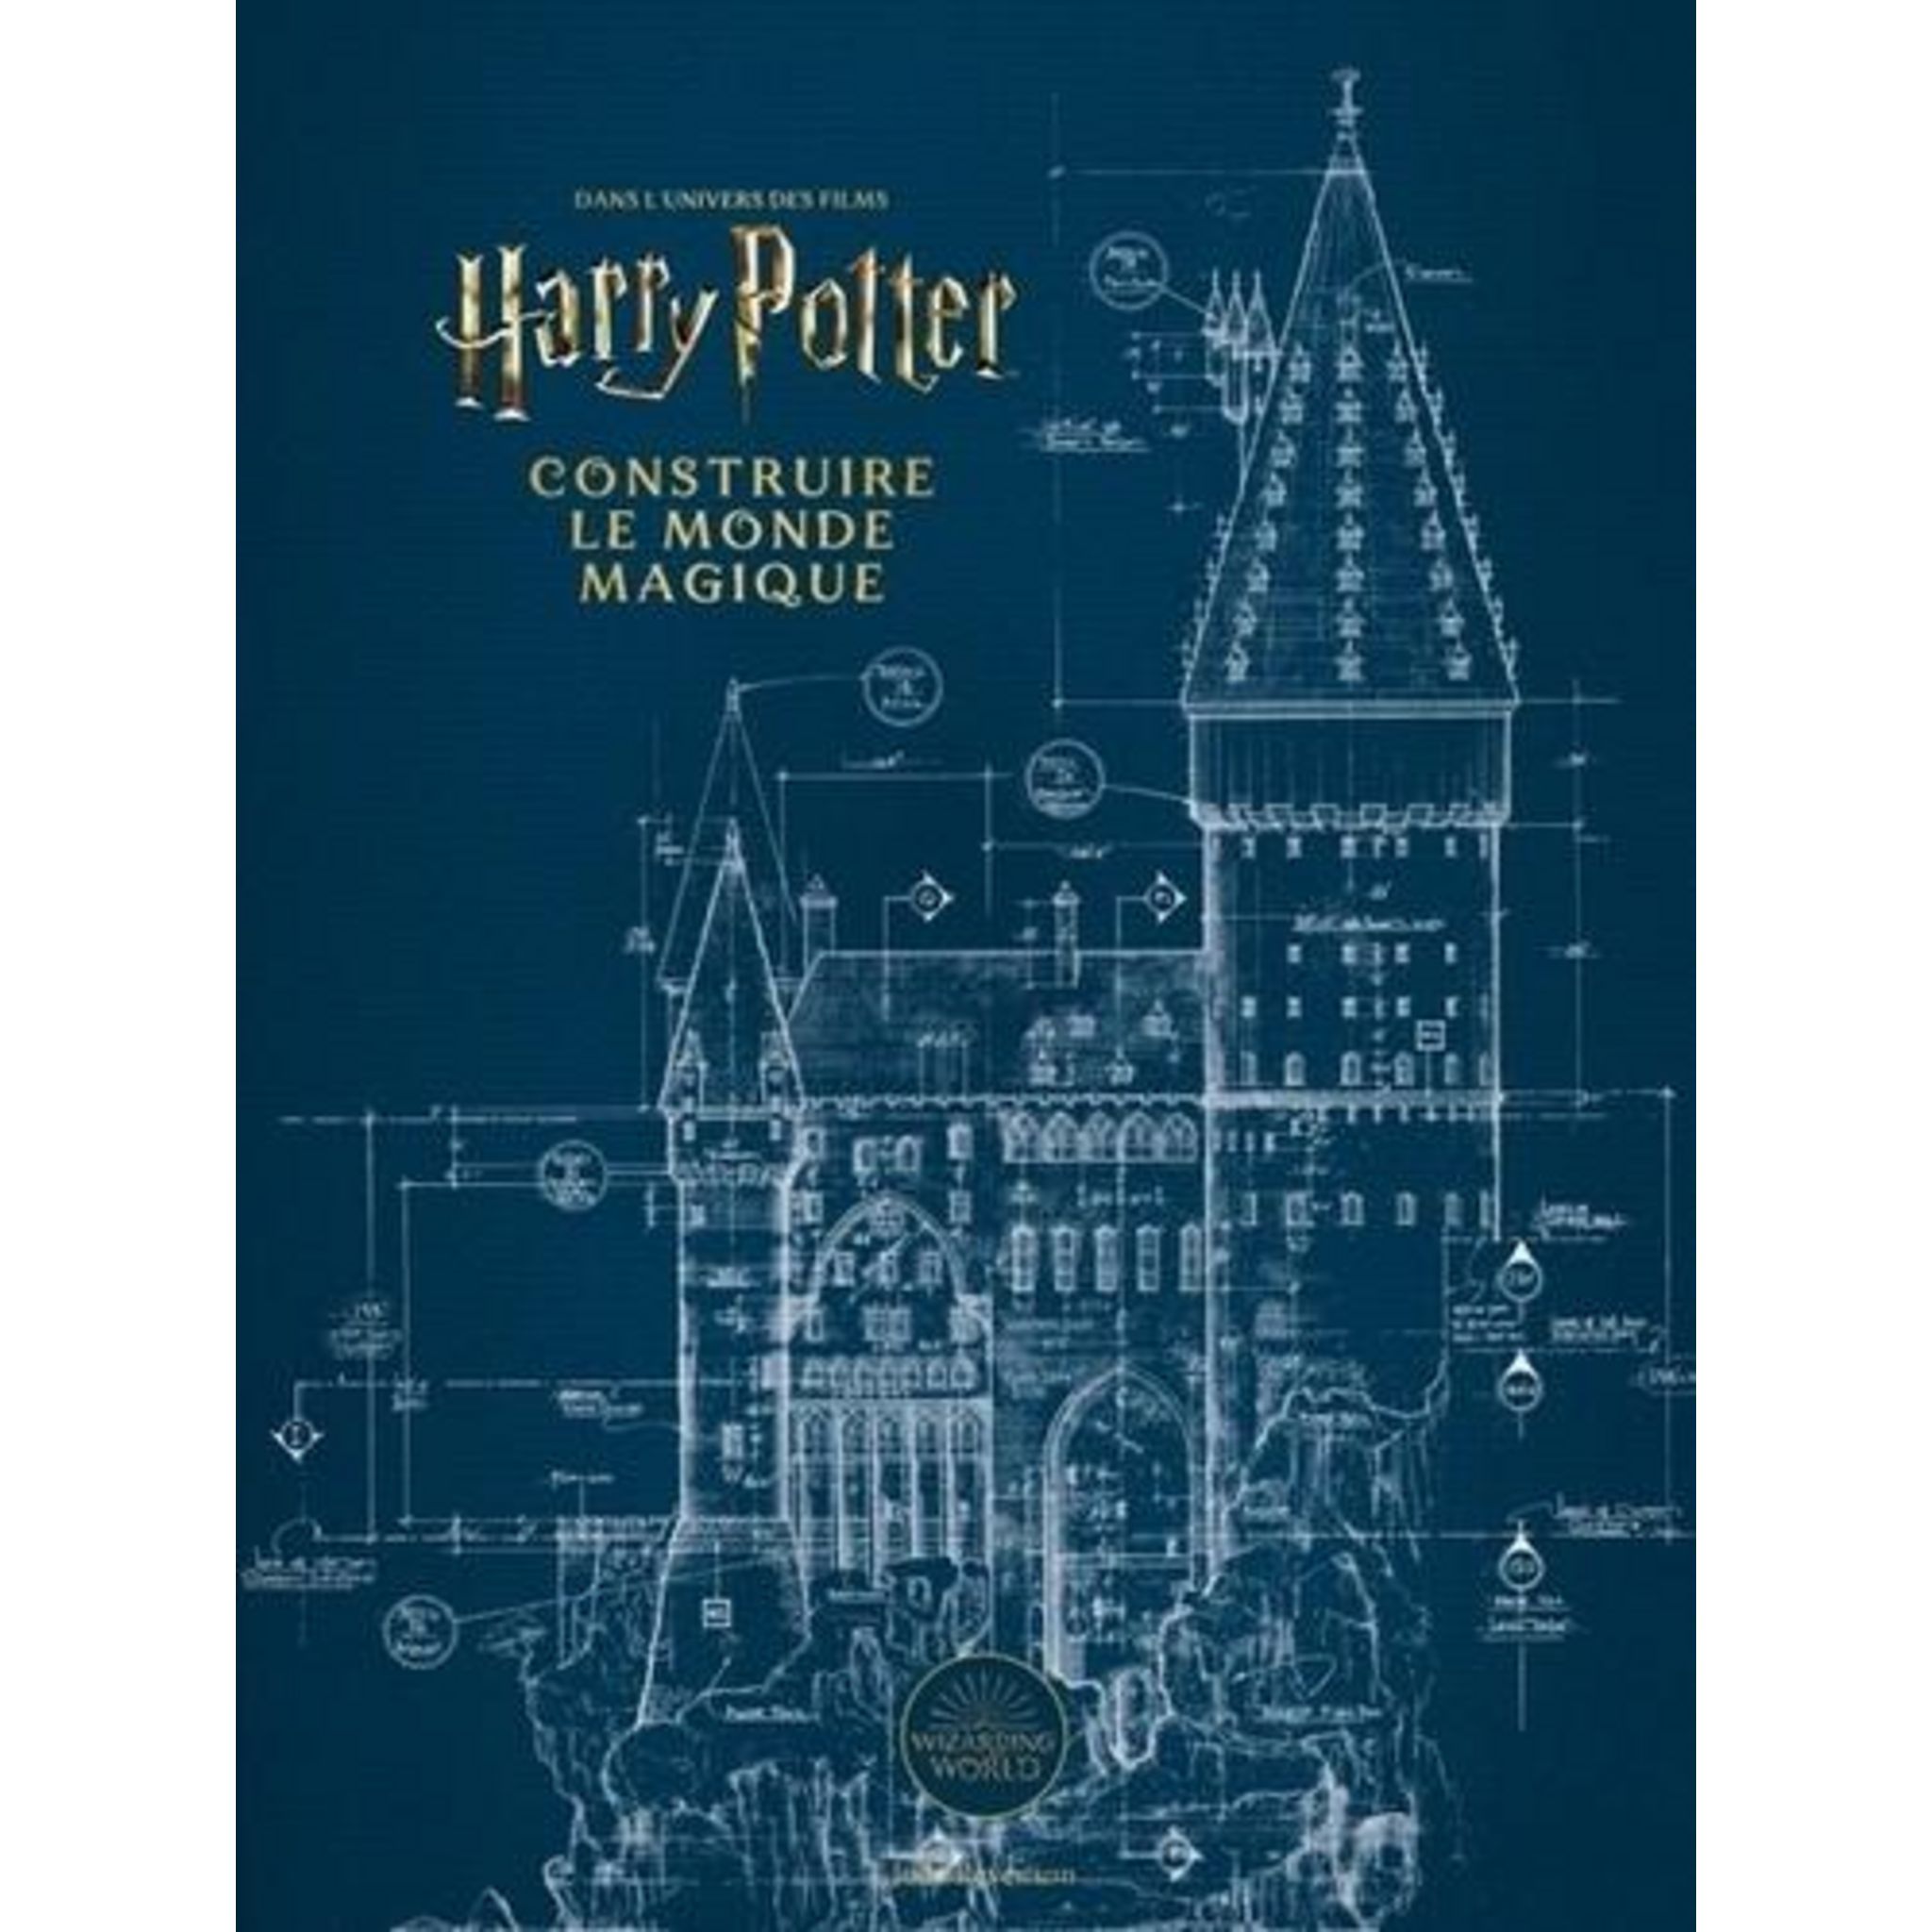 Critique : Harry Potter, la Magie de l'Aquarelle